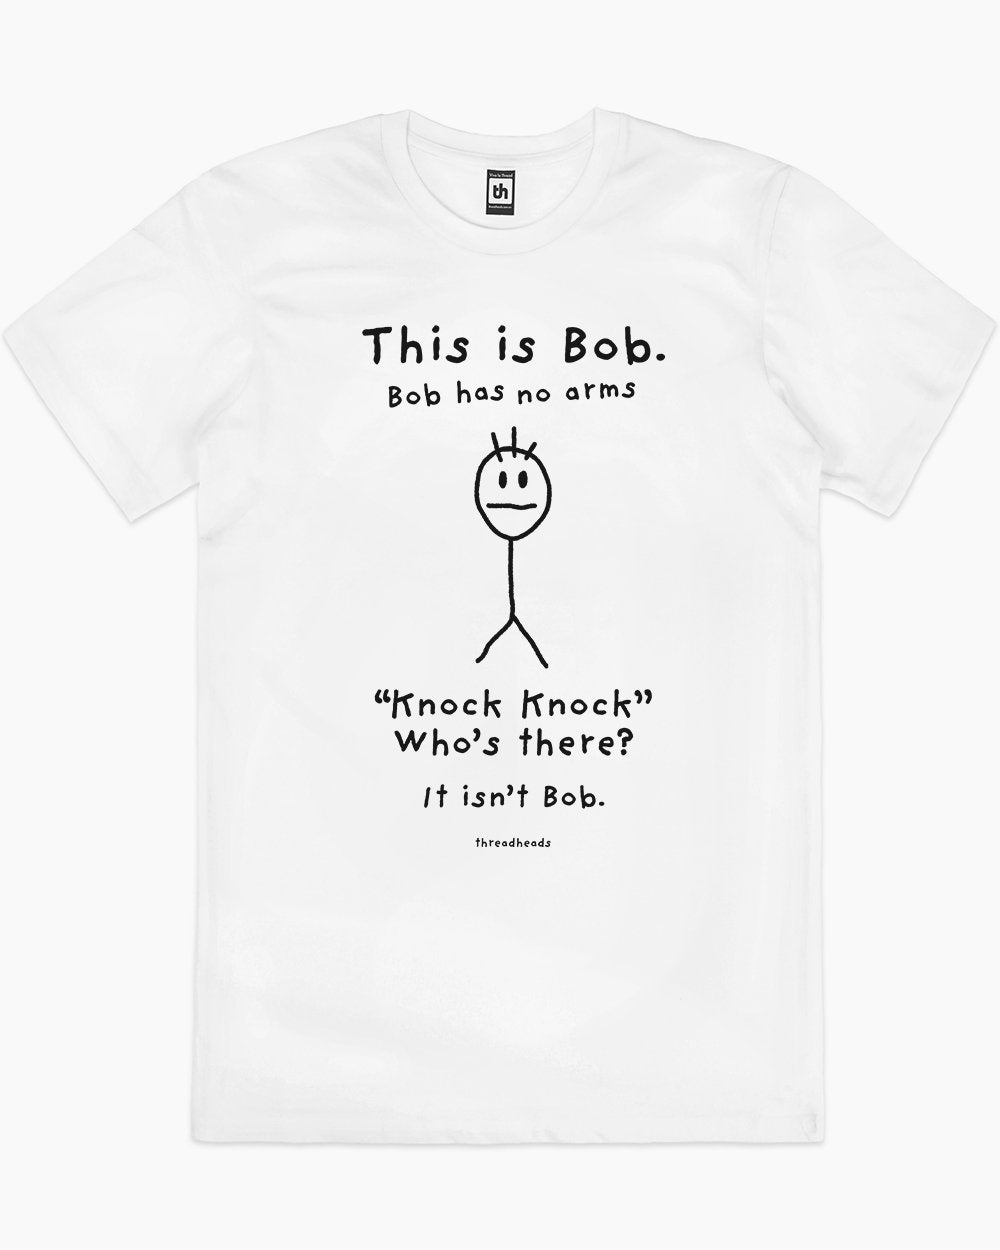 This is Bob T-Shirt | Funny Shirt | Threadheads Exclusive